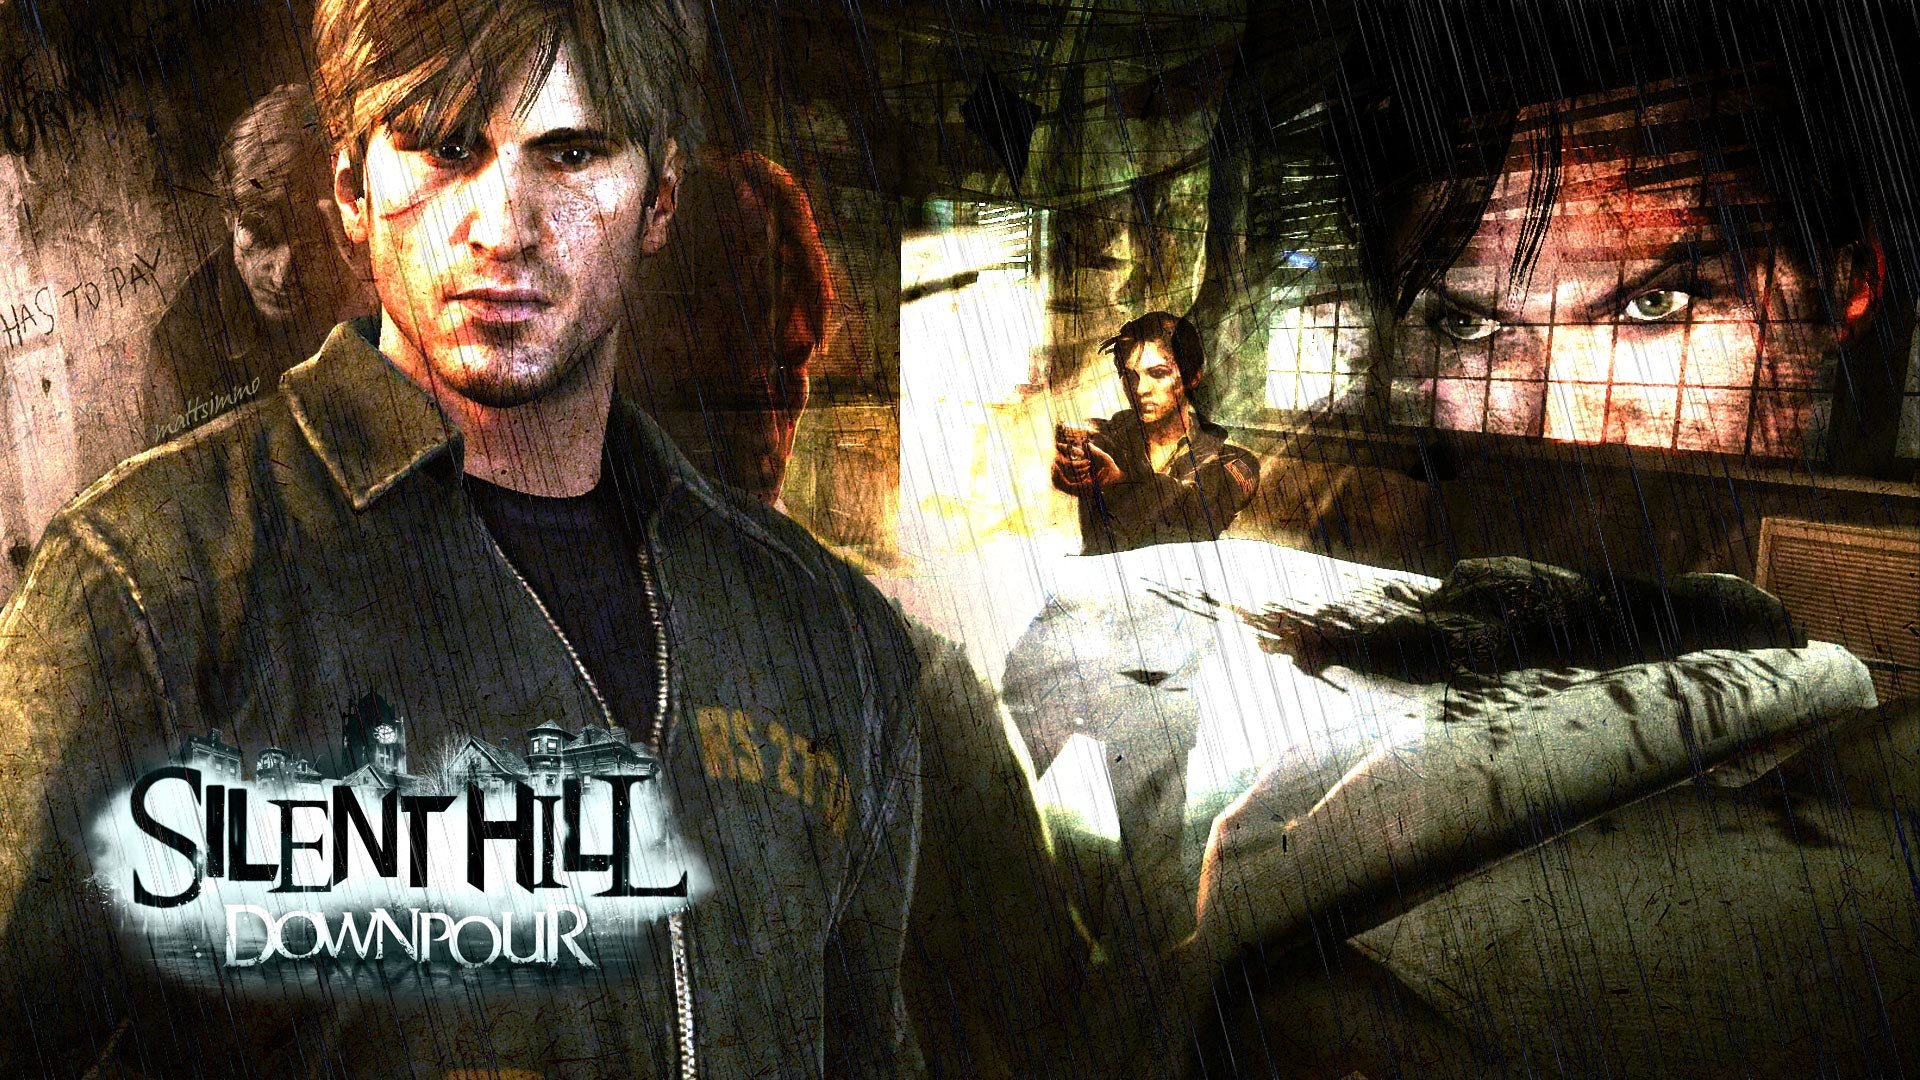 Free download Silent Hill wallpaper ID:53997 1080p for desktop